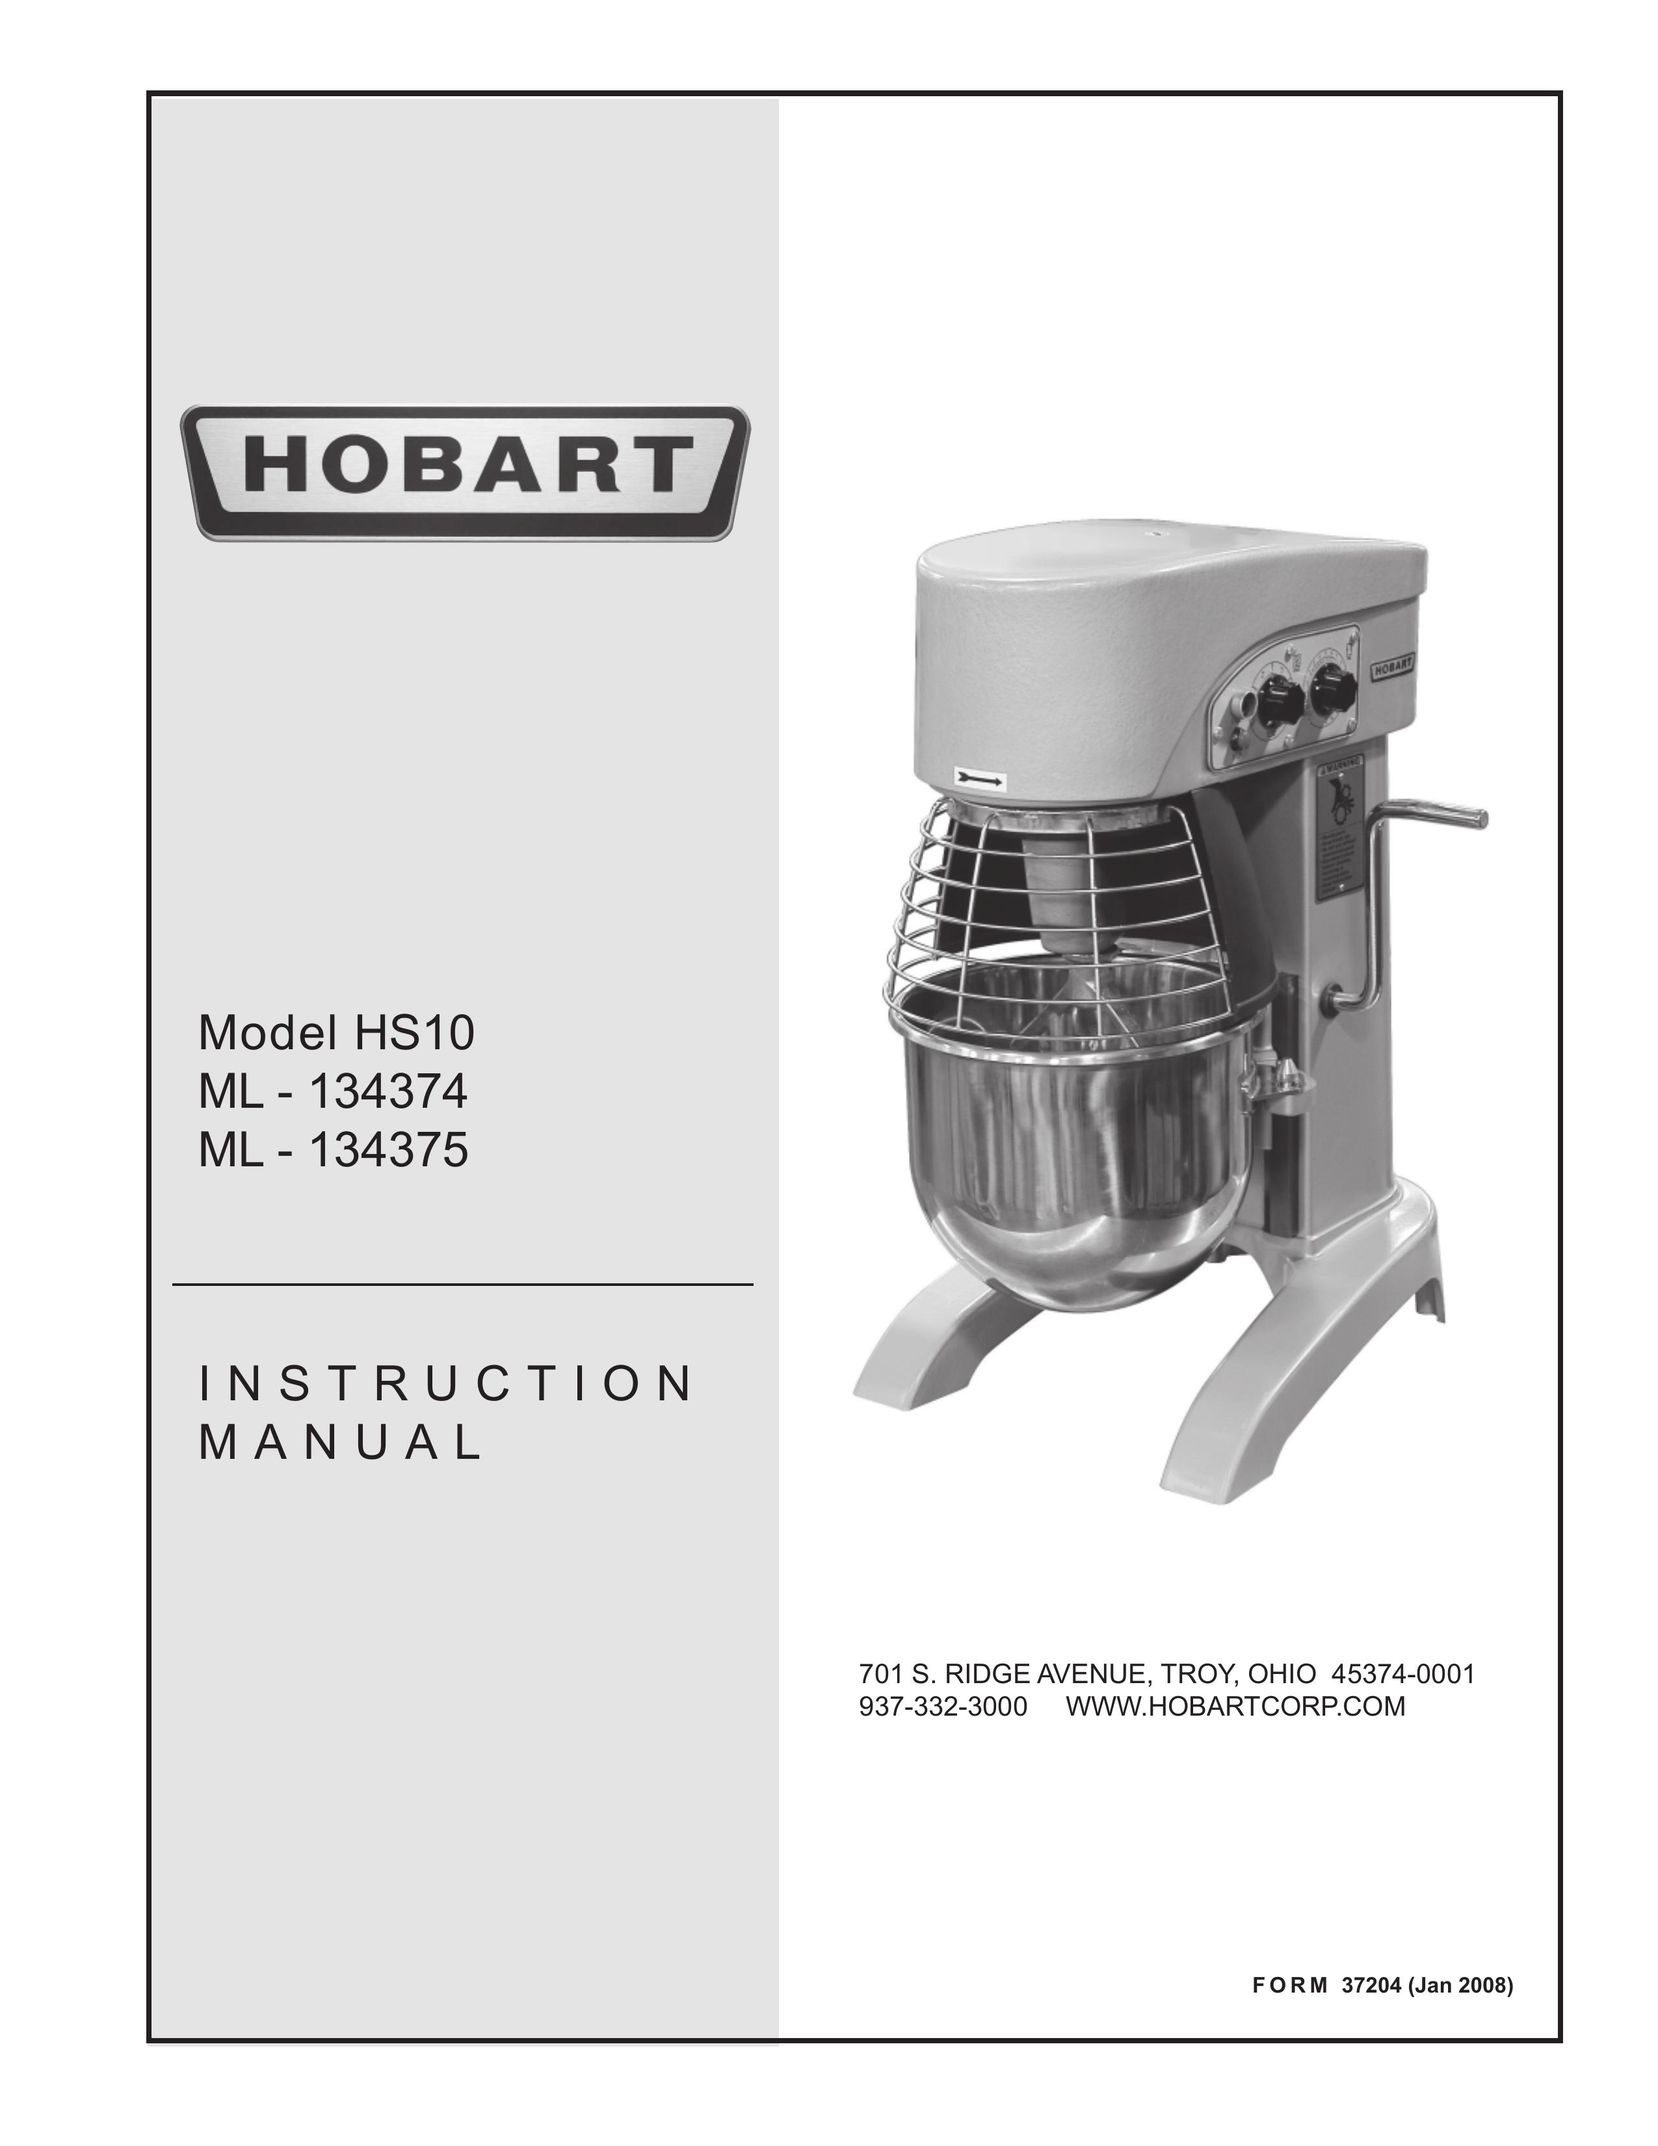 Hobart ML - 134374 Mixer User Manual